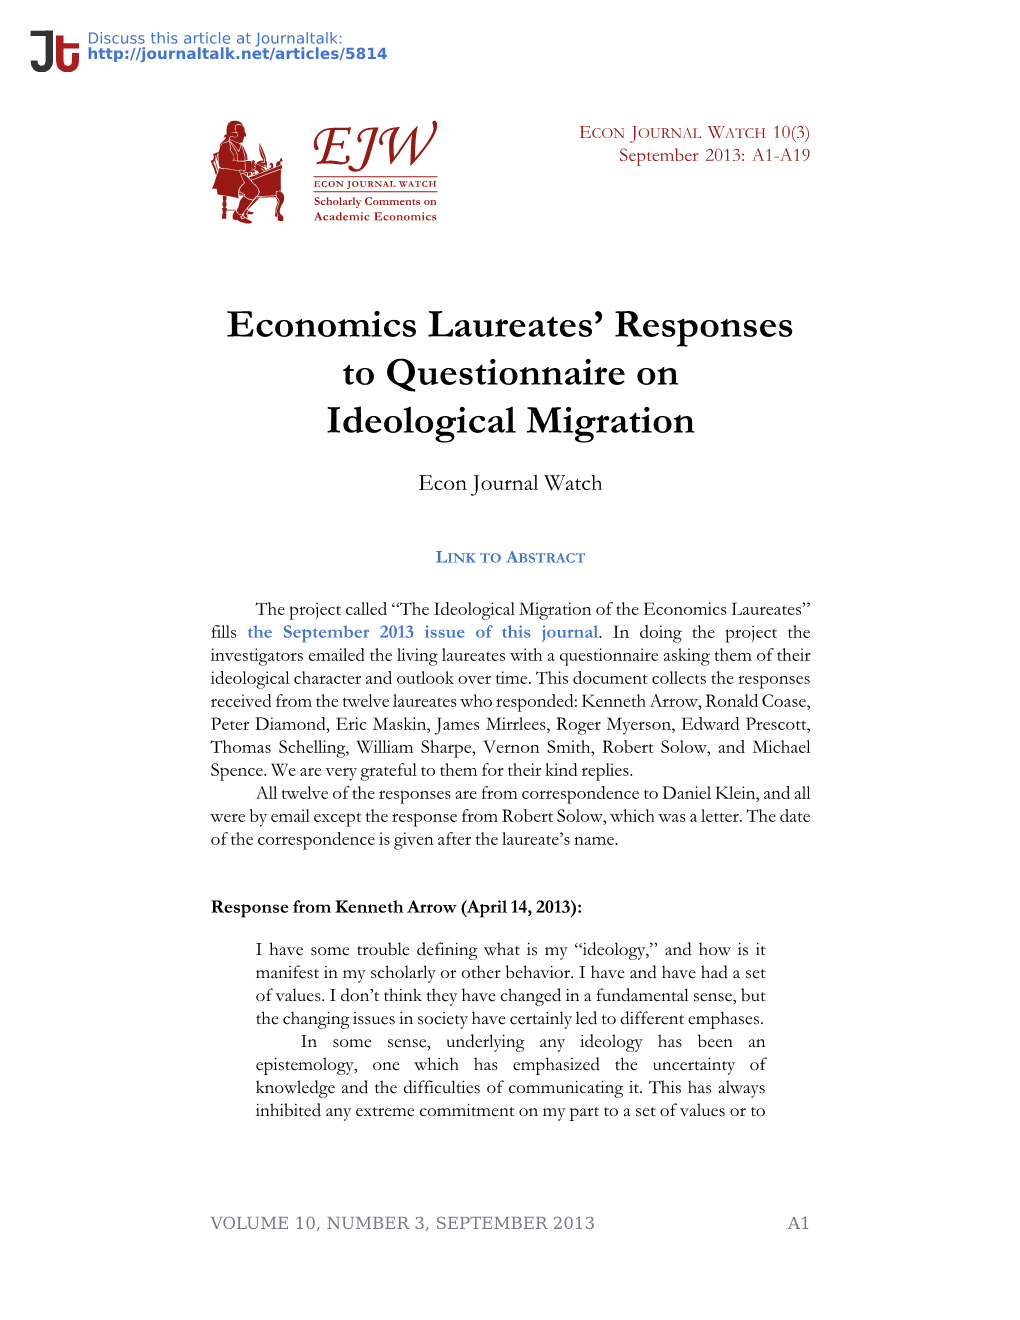 Economics Laureates' Responses to Questionnaire on Ideological Migration · Econ Journal Watch: Economists,Nobel Prize in Econ